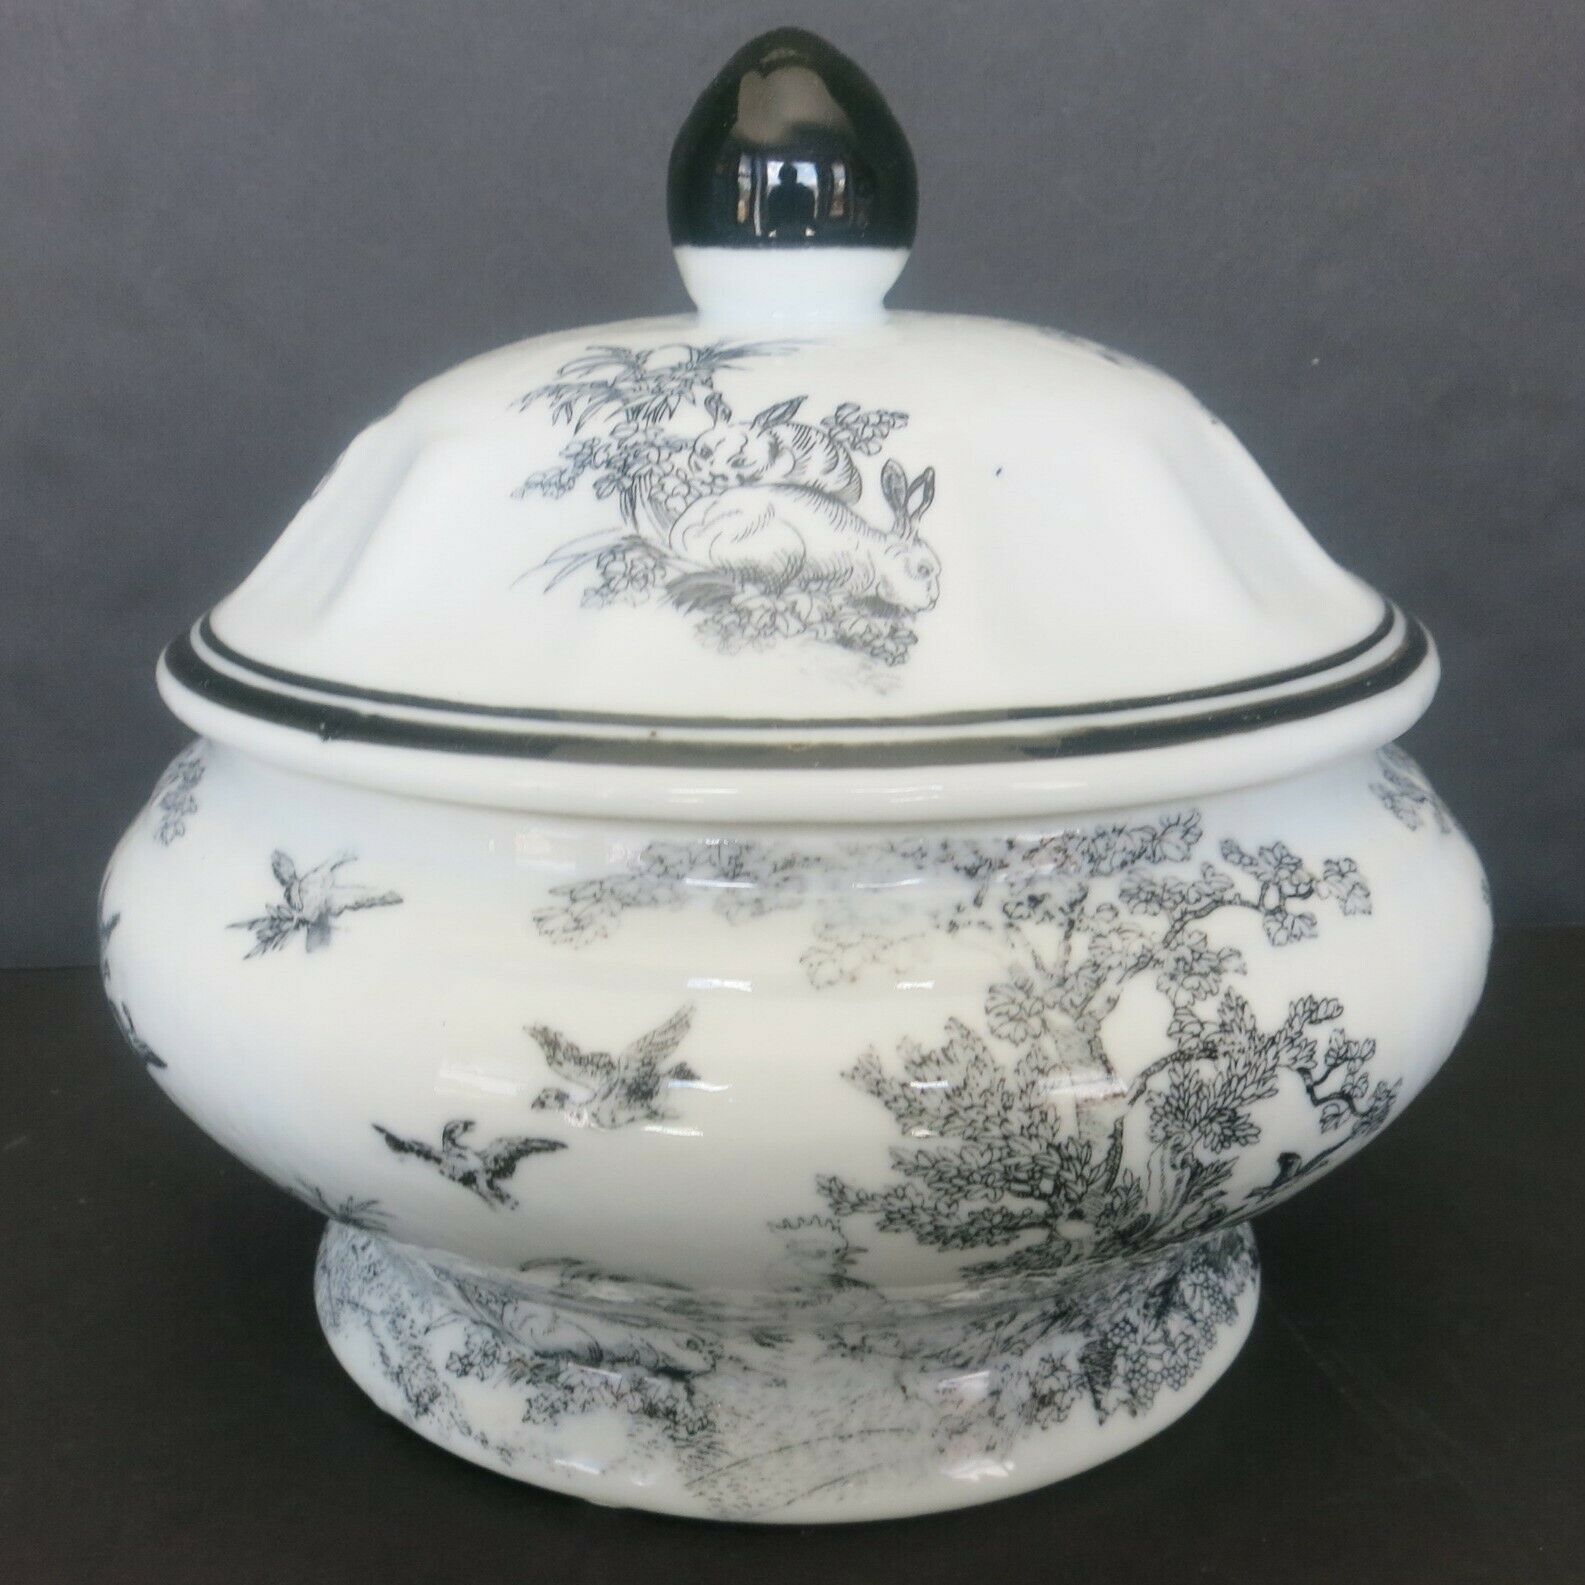 Vintage Black & White Asian Transferware Lidded Pot Bowl Animals & Trees Scene